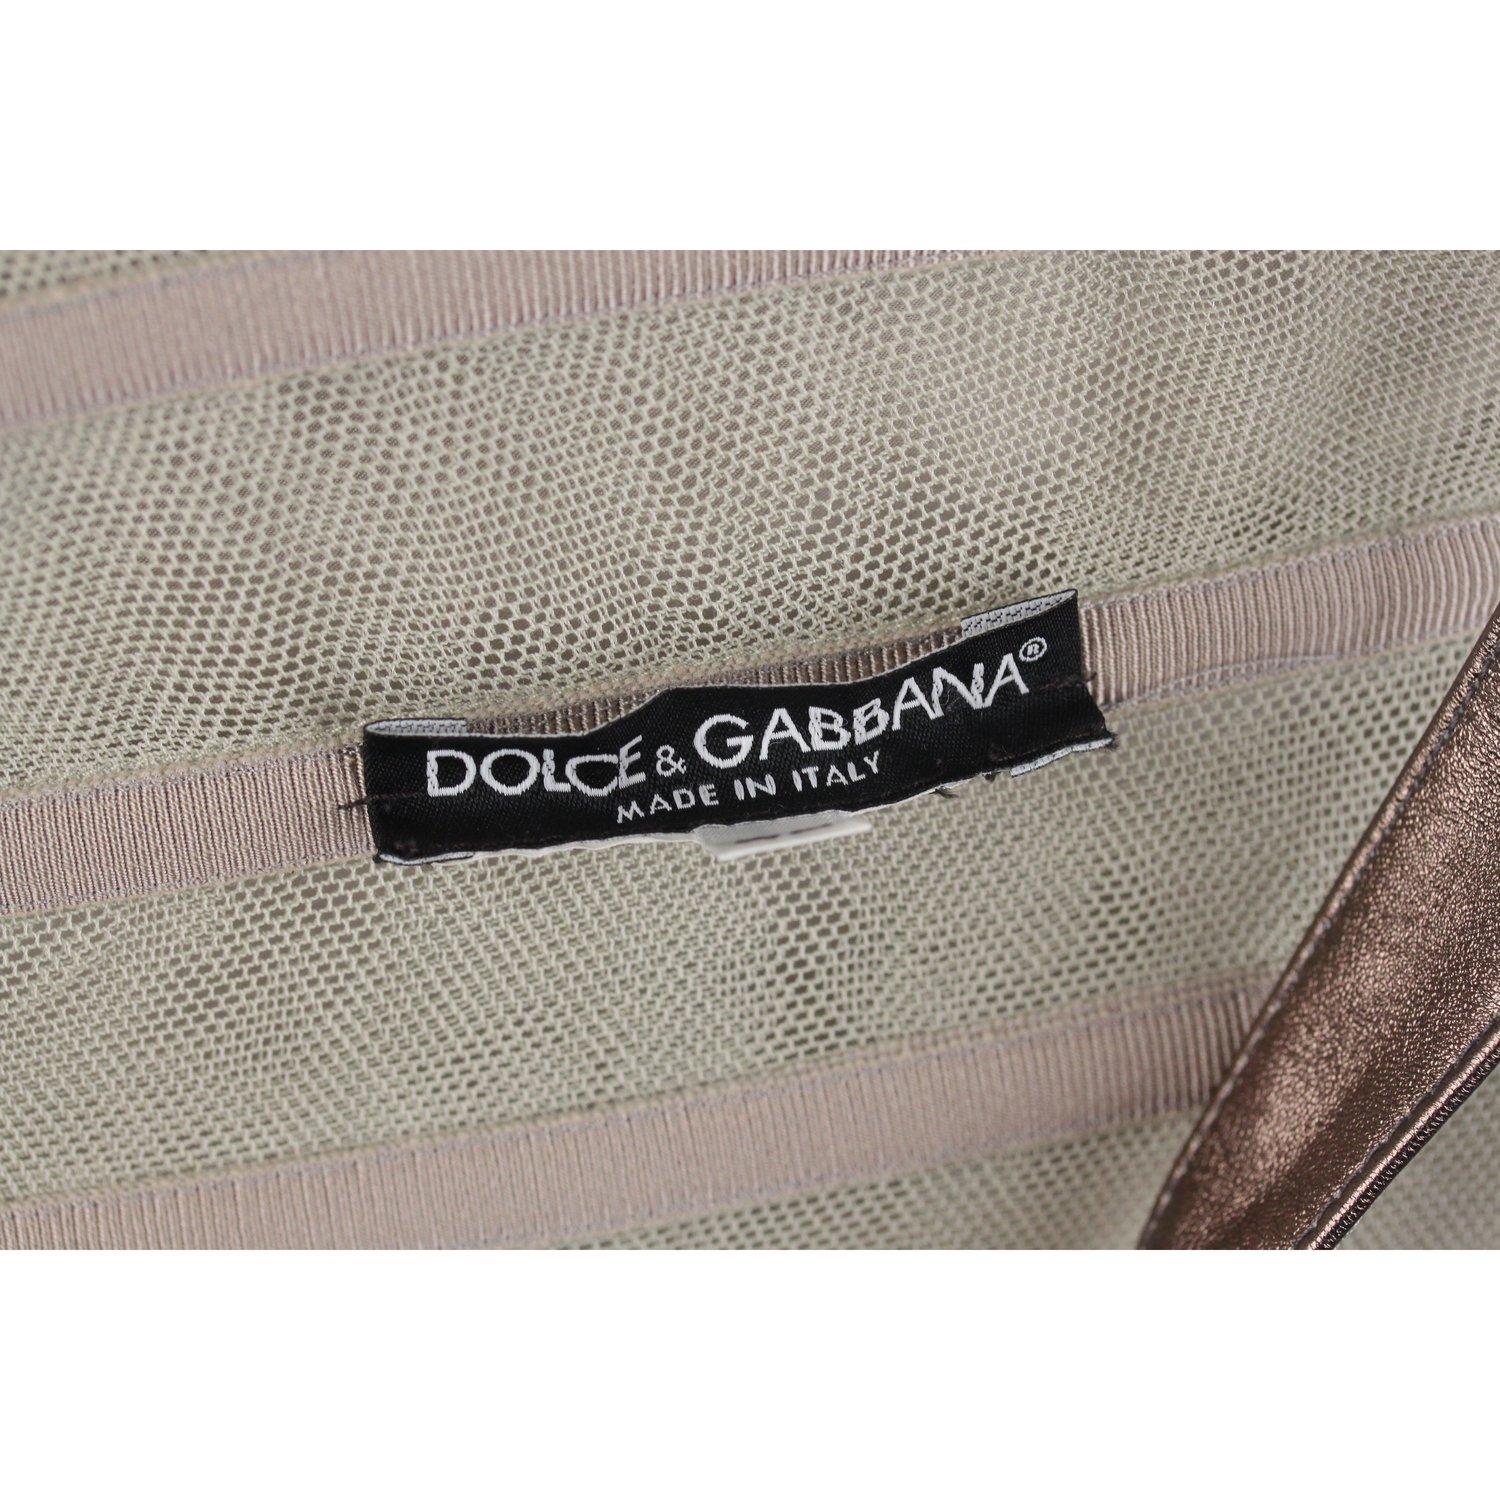 Dolce & Gabbana Corset Bustier Top Size 42 3